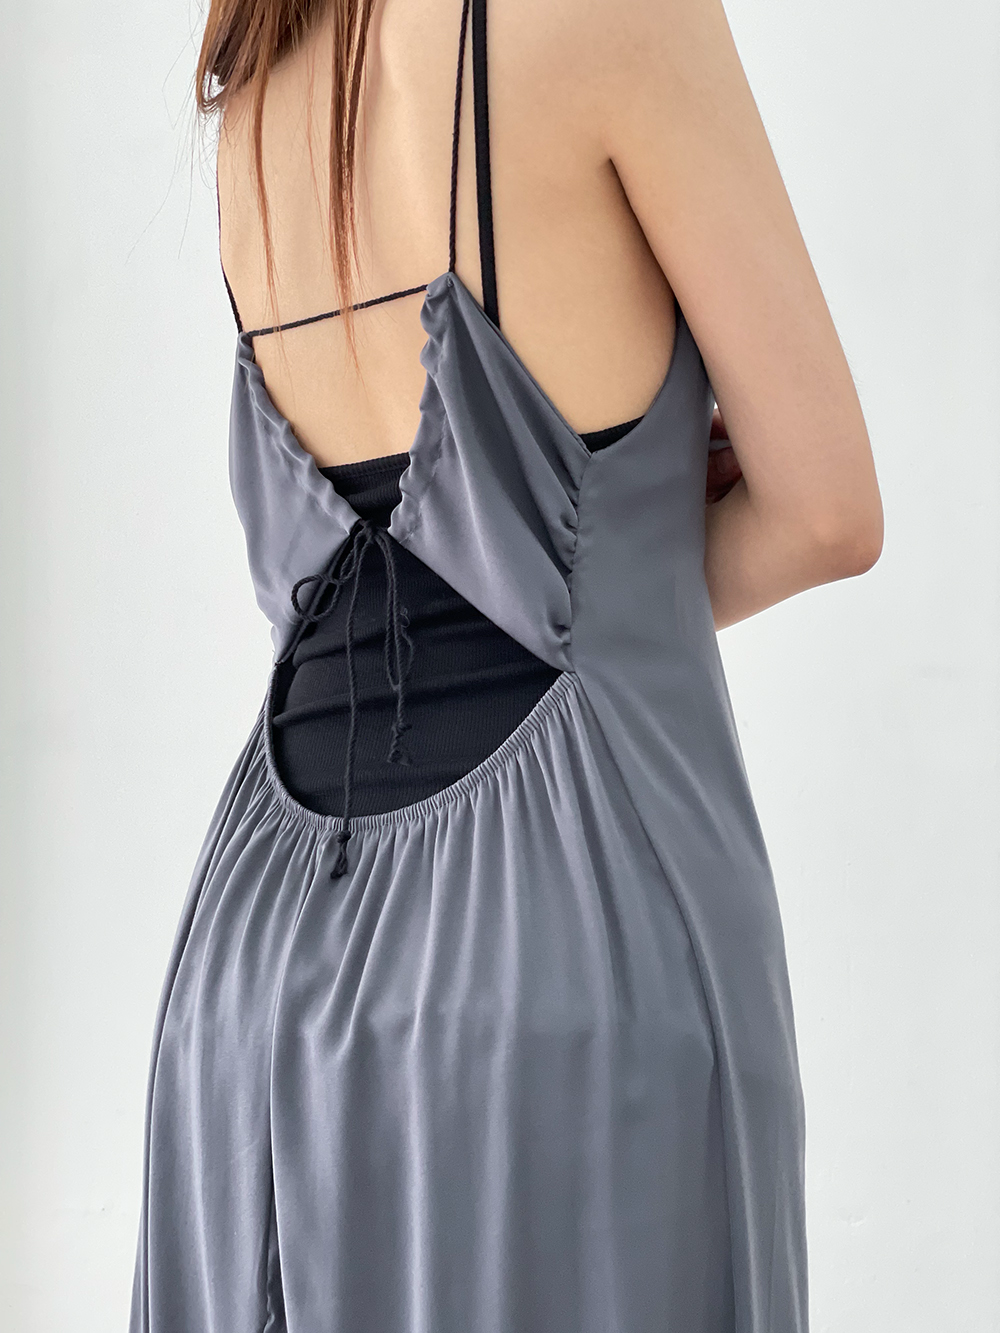 silky v-neck strap dress (3color)